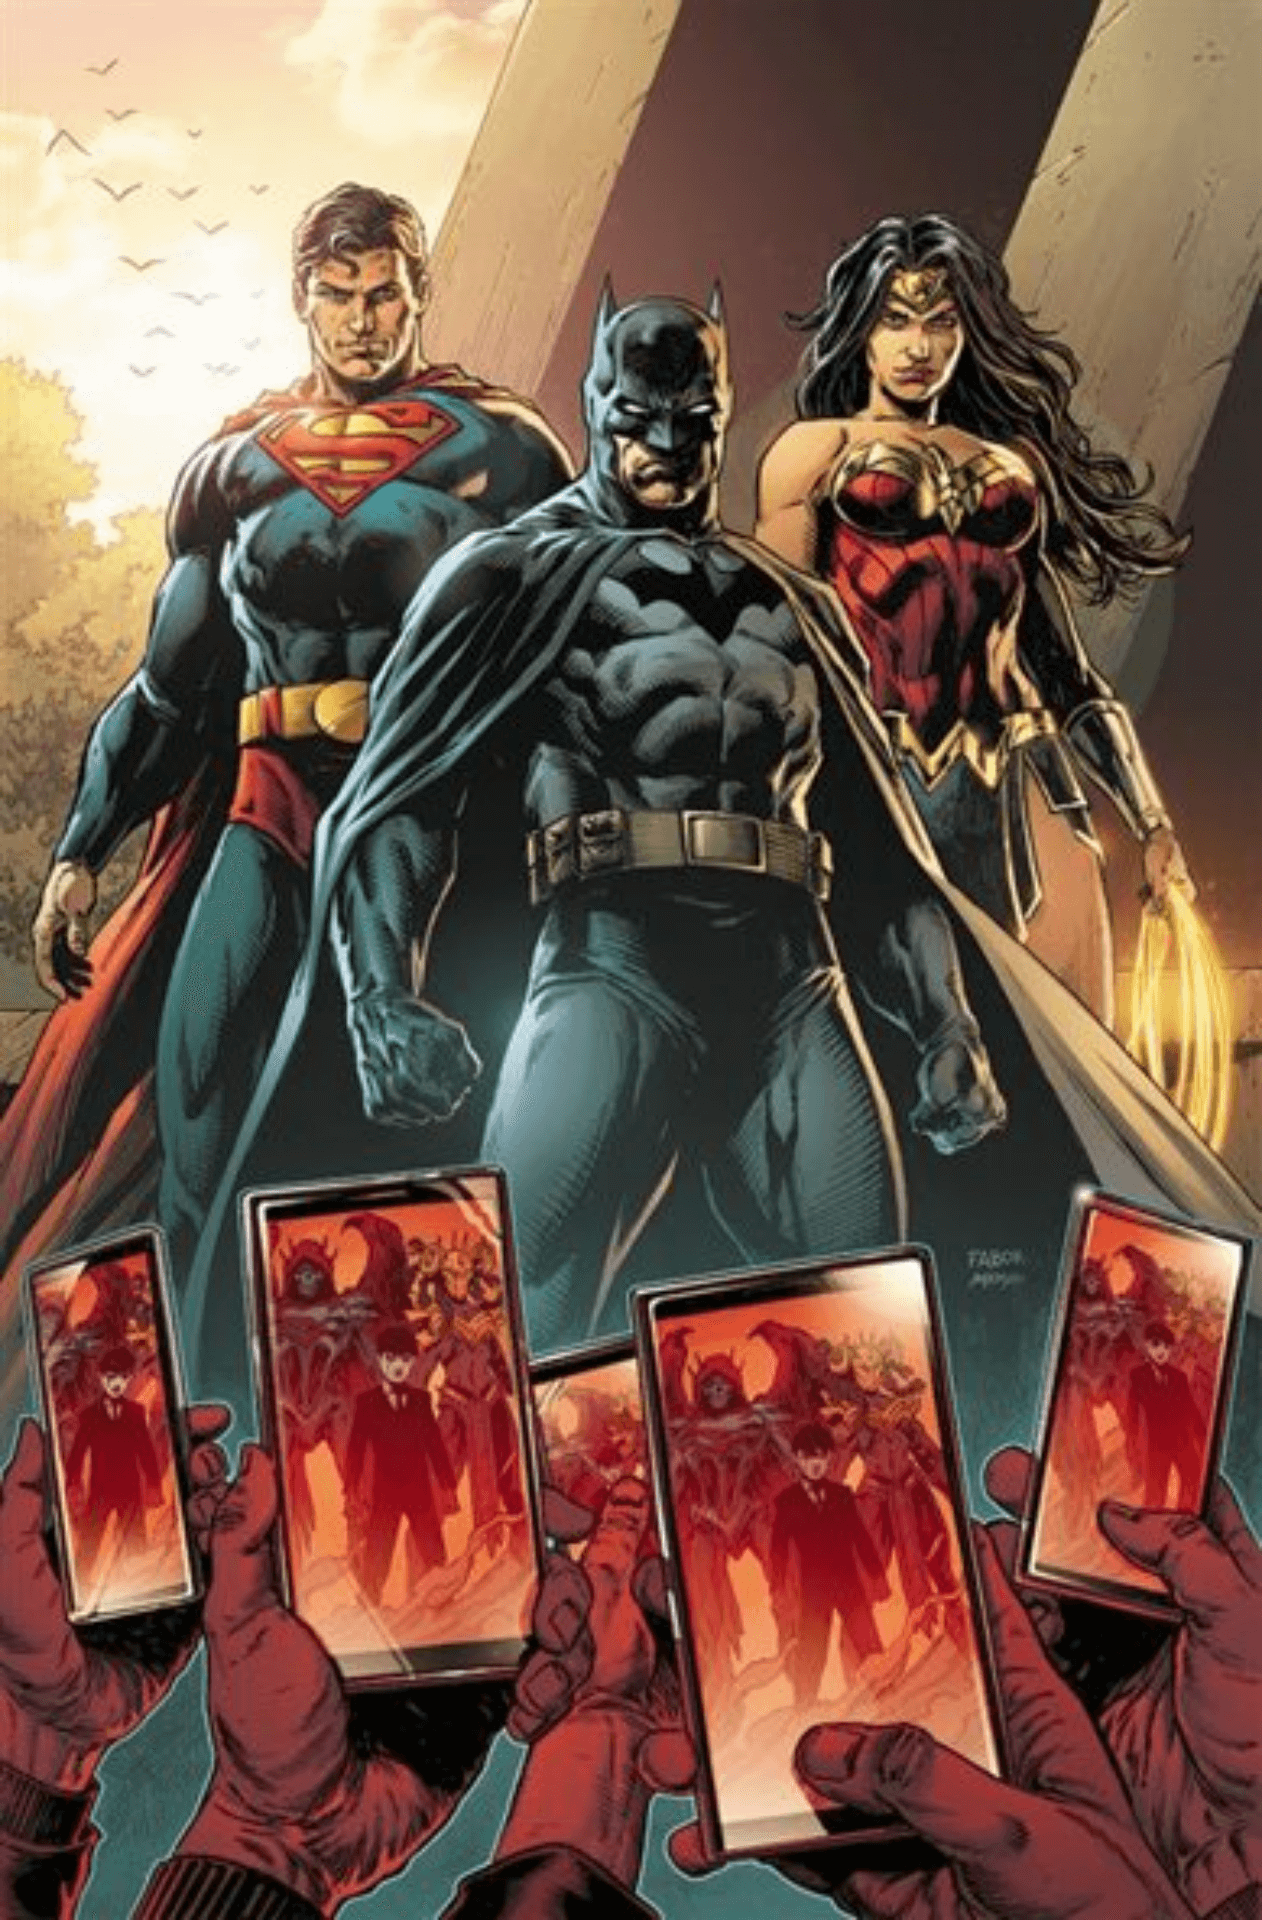 Couverture de Dawn of DC Knight Terrors Free Comic Book Day Special Edition par Jason Fabok